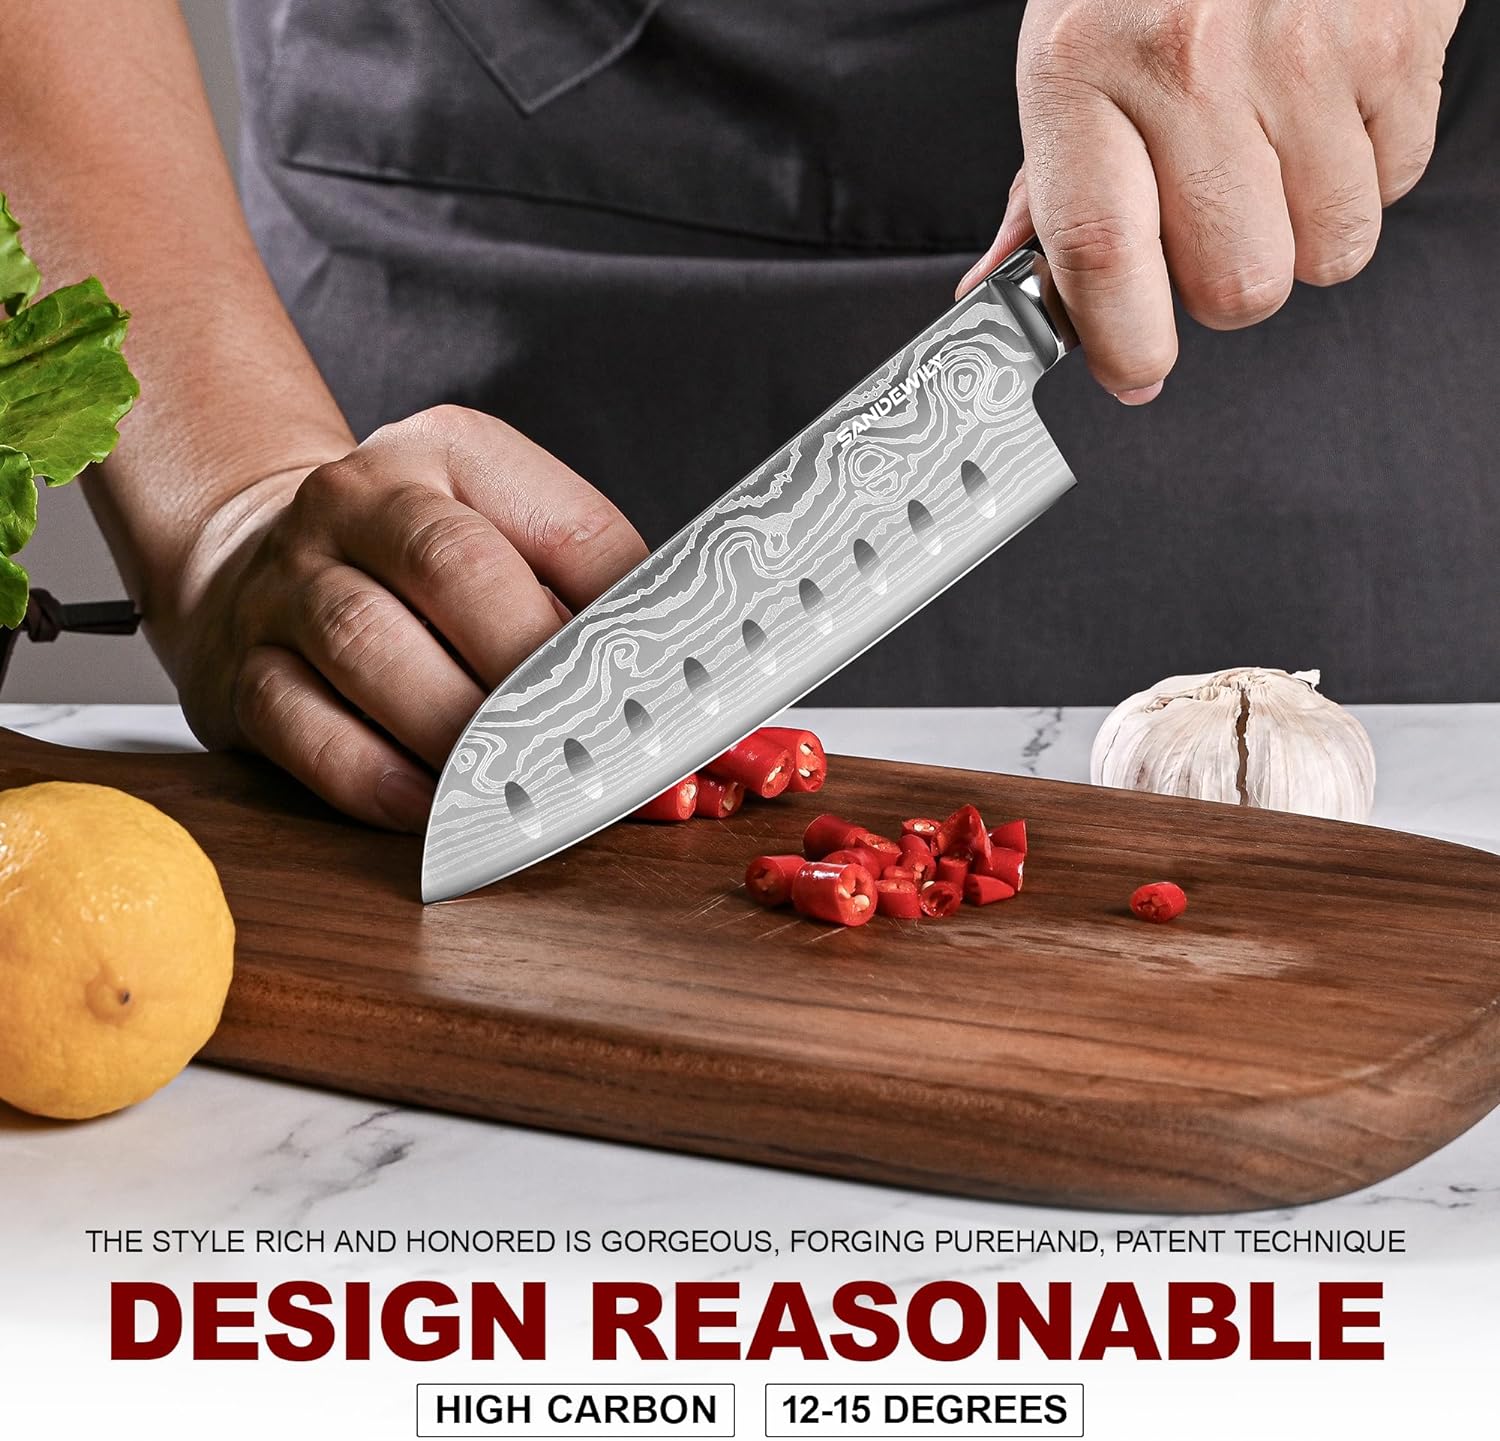 KD 7" Japanese Santoku Knife - Ultra Sharp Kitchen Chef Knife with Sheath & Gift Box